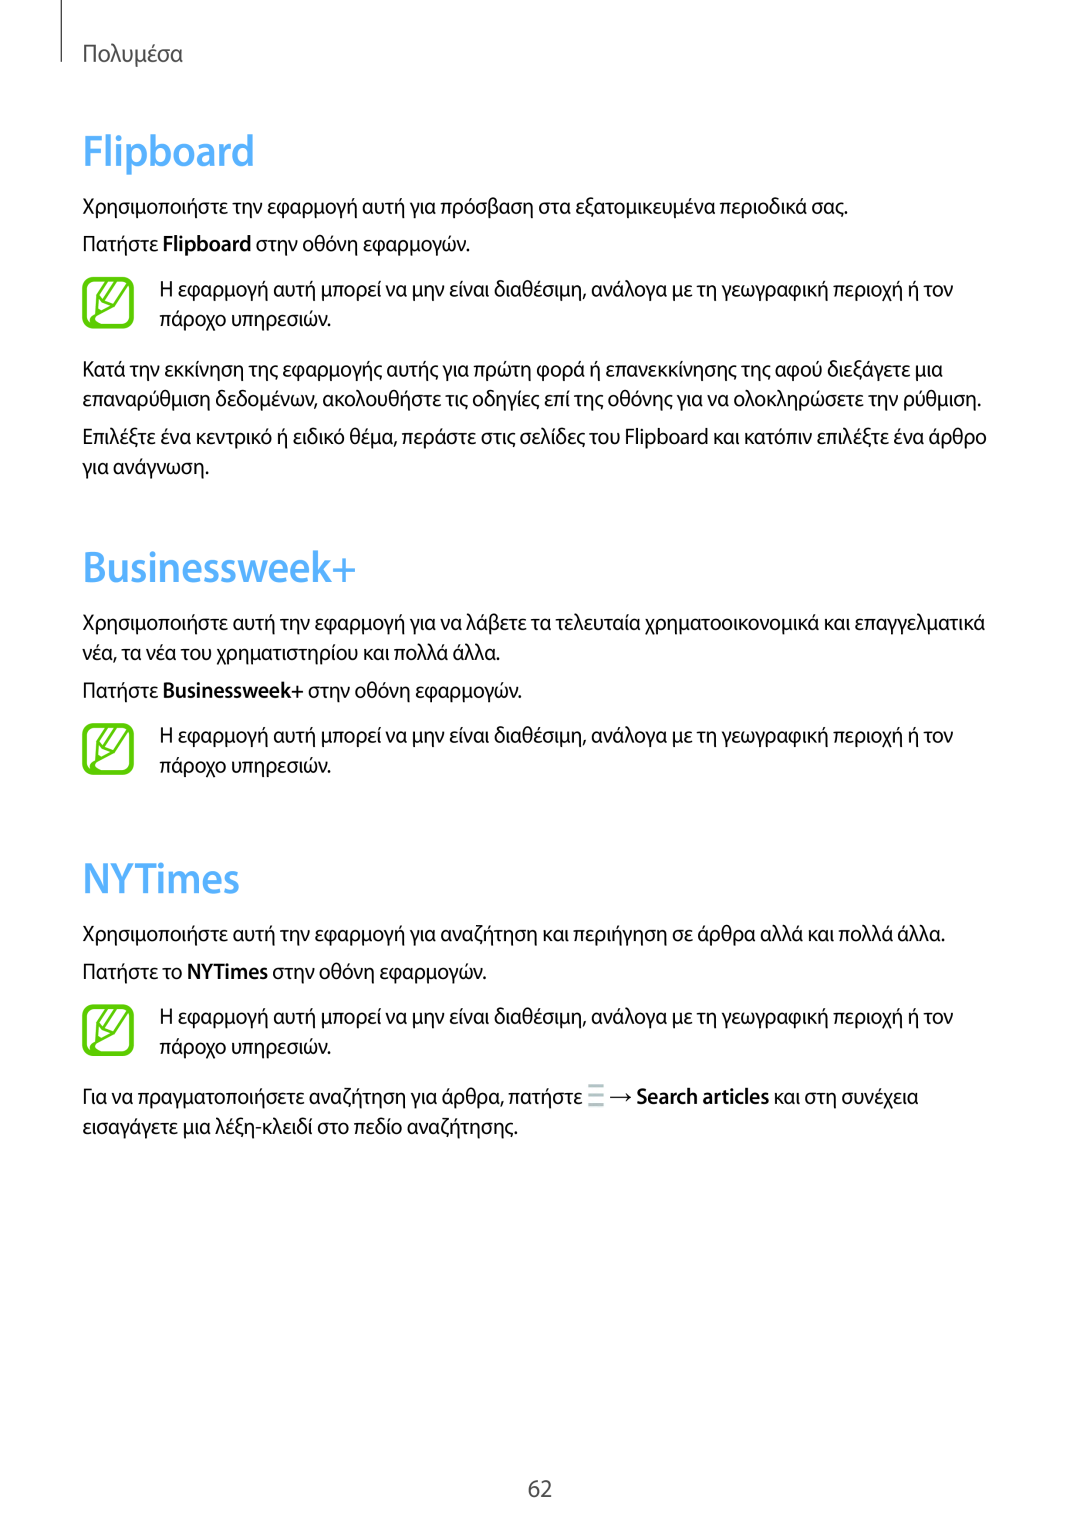 Samsung GT-P5210MKAEUR, GT-P5210ZWAEUR manual Flipboard, Businessweek+, NYTimes, Πολυμέσα 